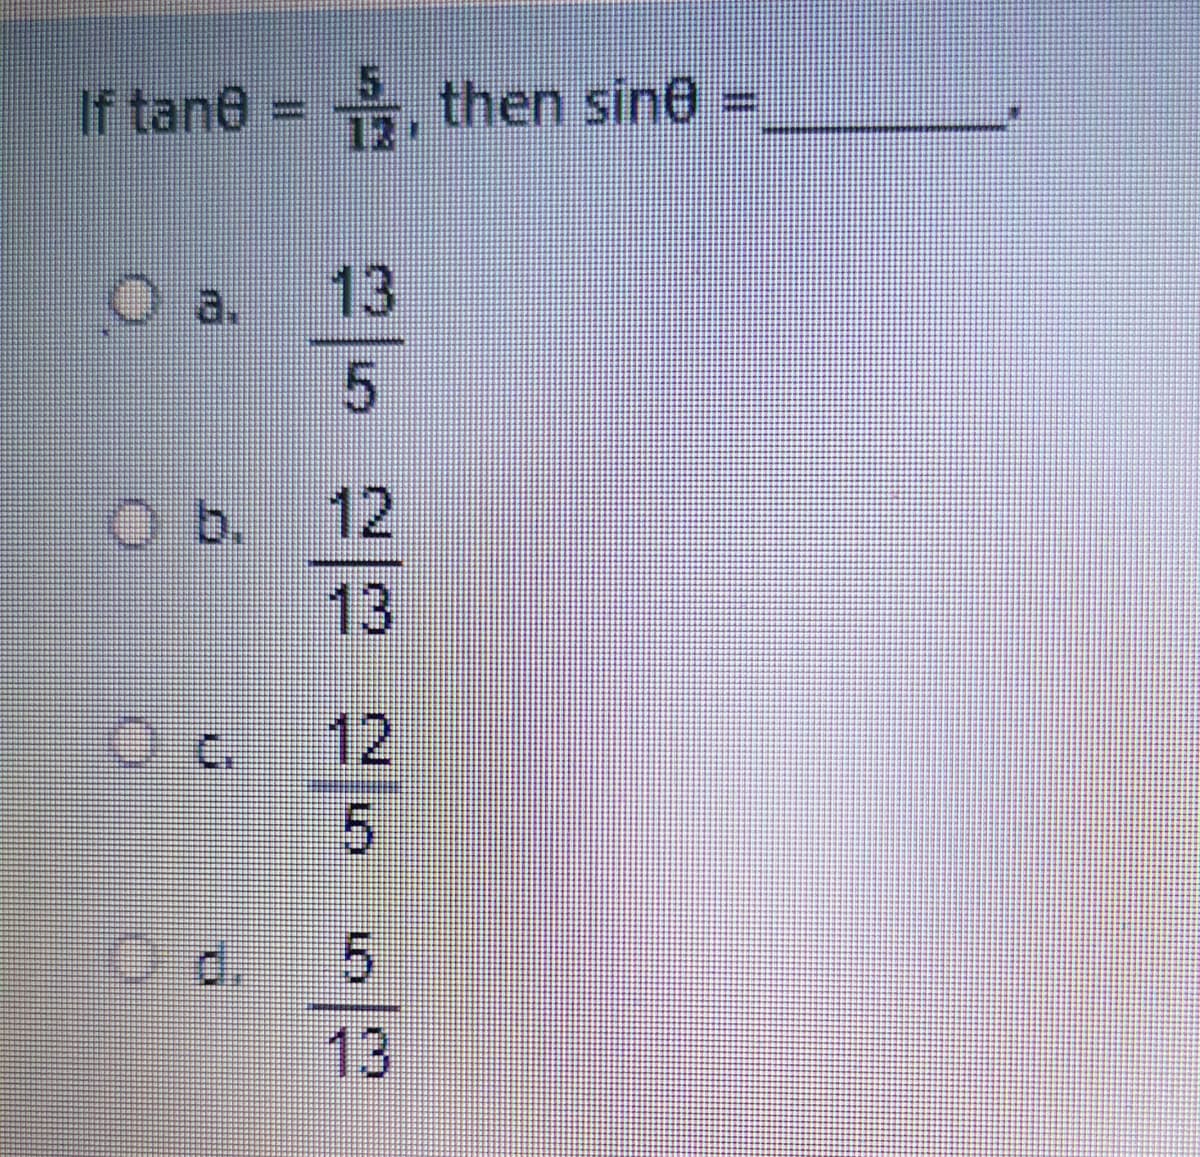 If tane = ,
then sine
Oa.
13
O b. 12
13
12
5.
5.
13
d.
